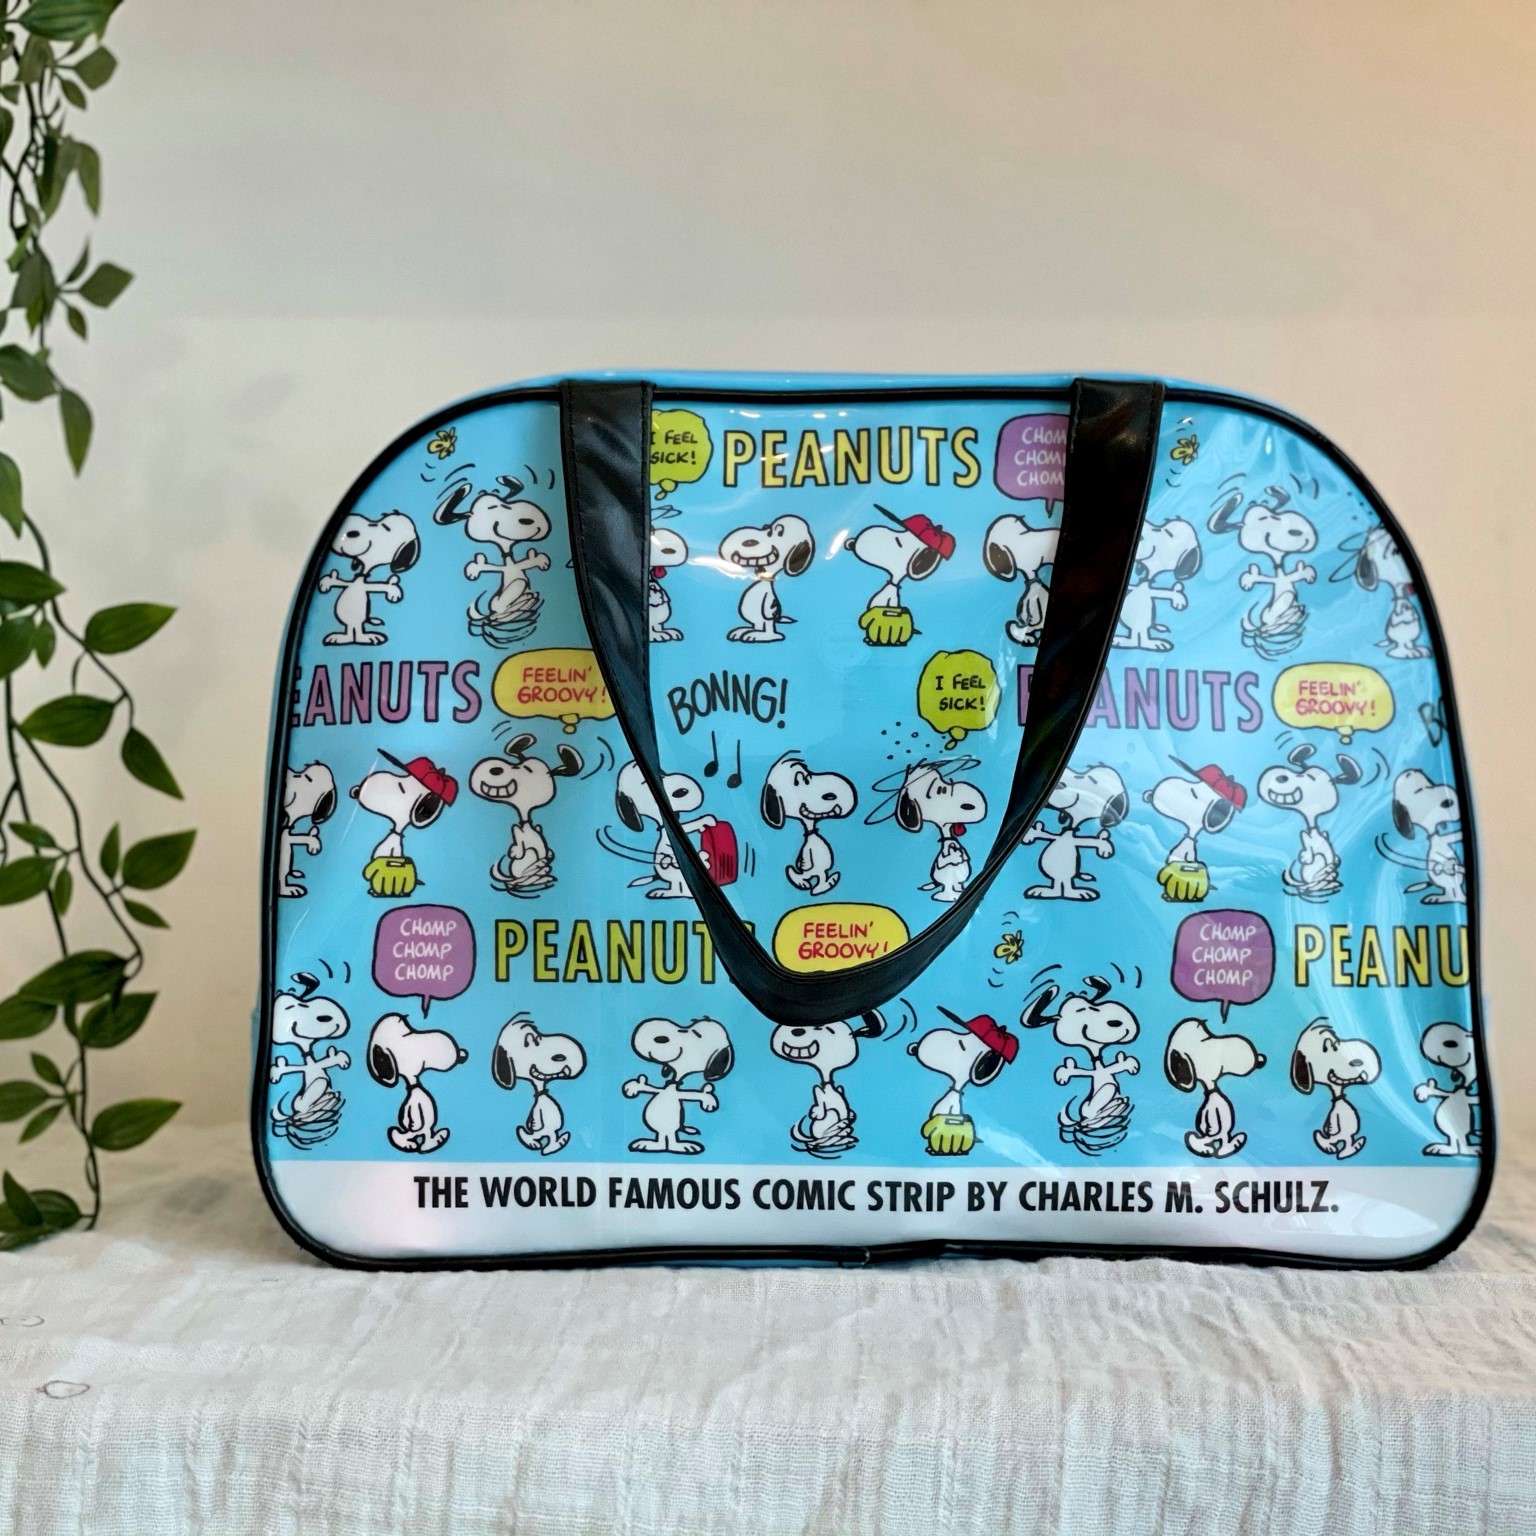 Snoopy bag in blue